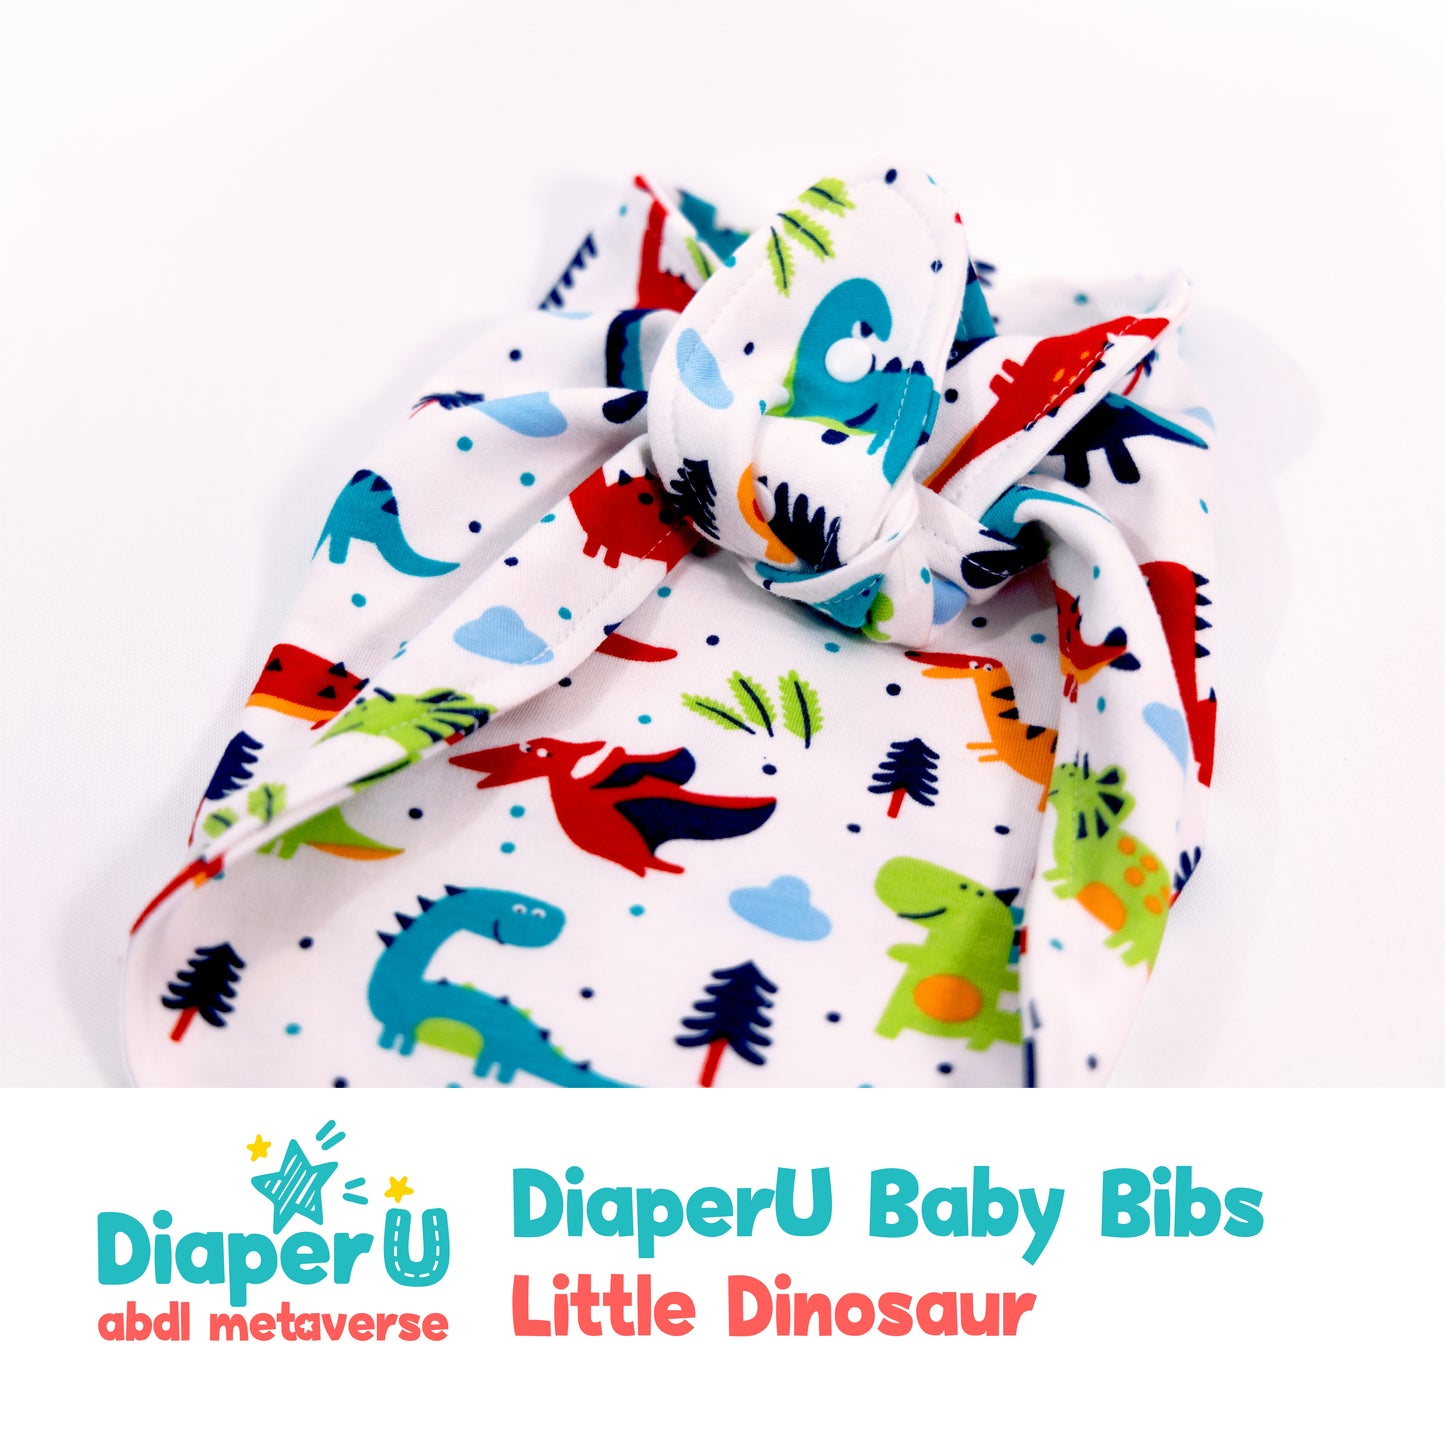 ABDL Baby Bibs - Little Dinosaur (Adult Size)